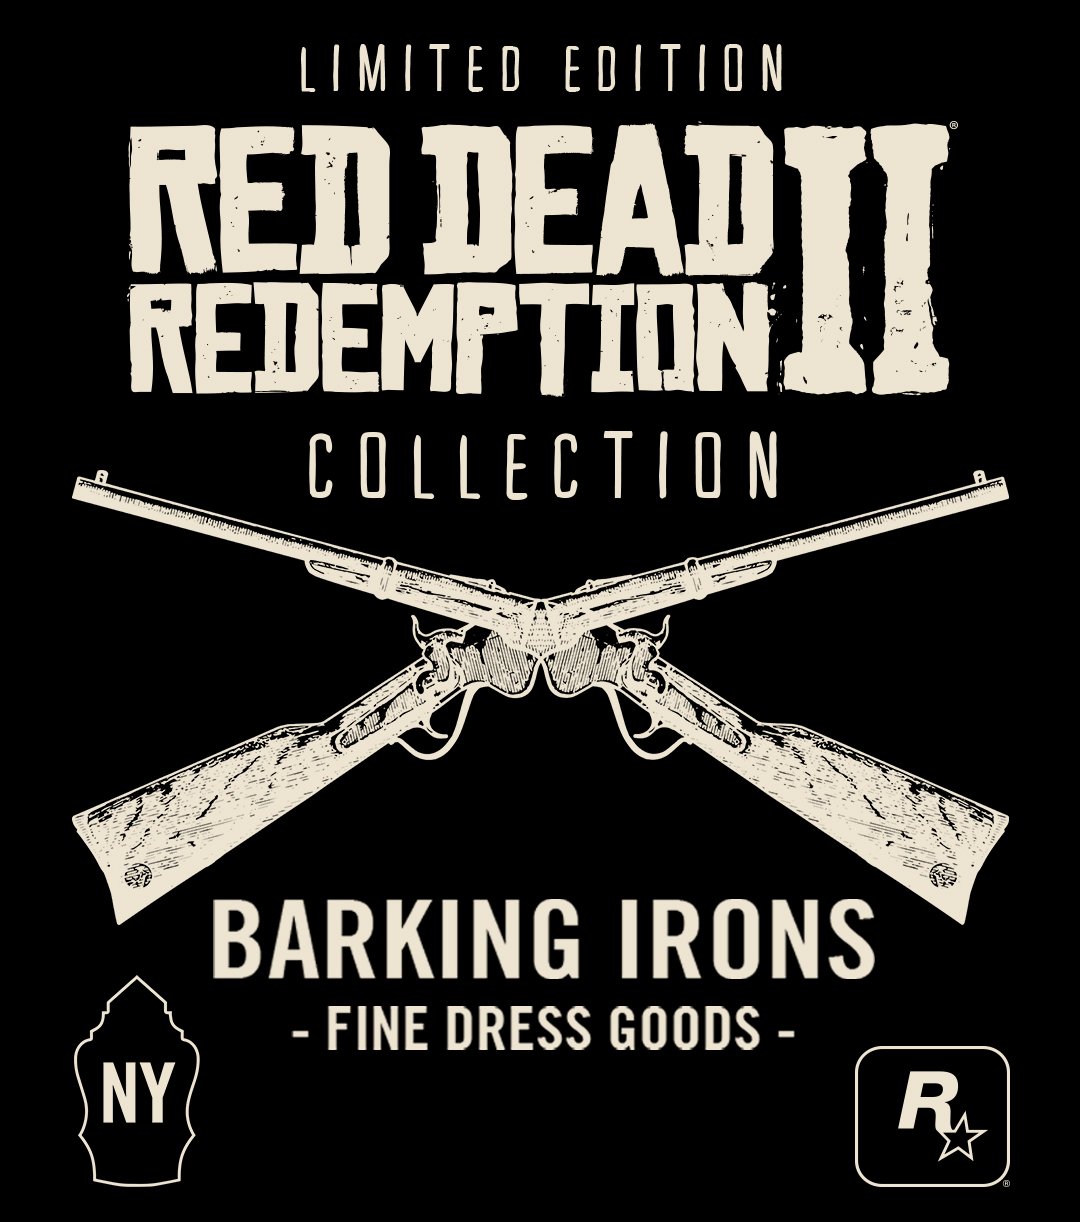 Red Dead Redemption 2 Clothing Line Nov 2018 #9